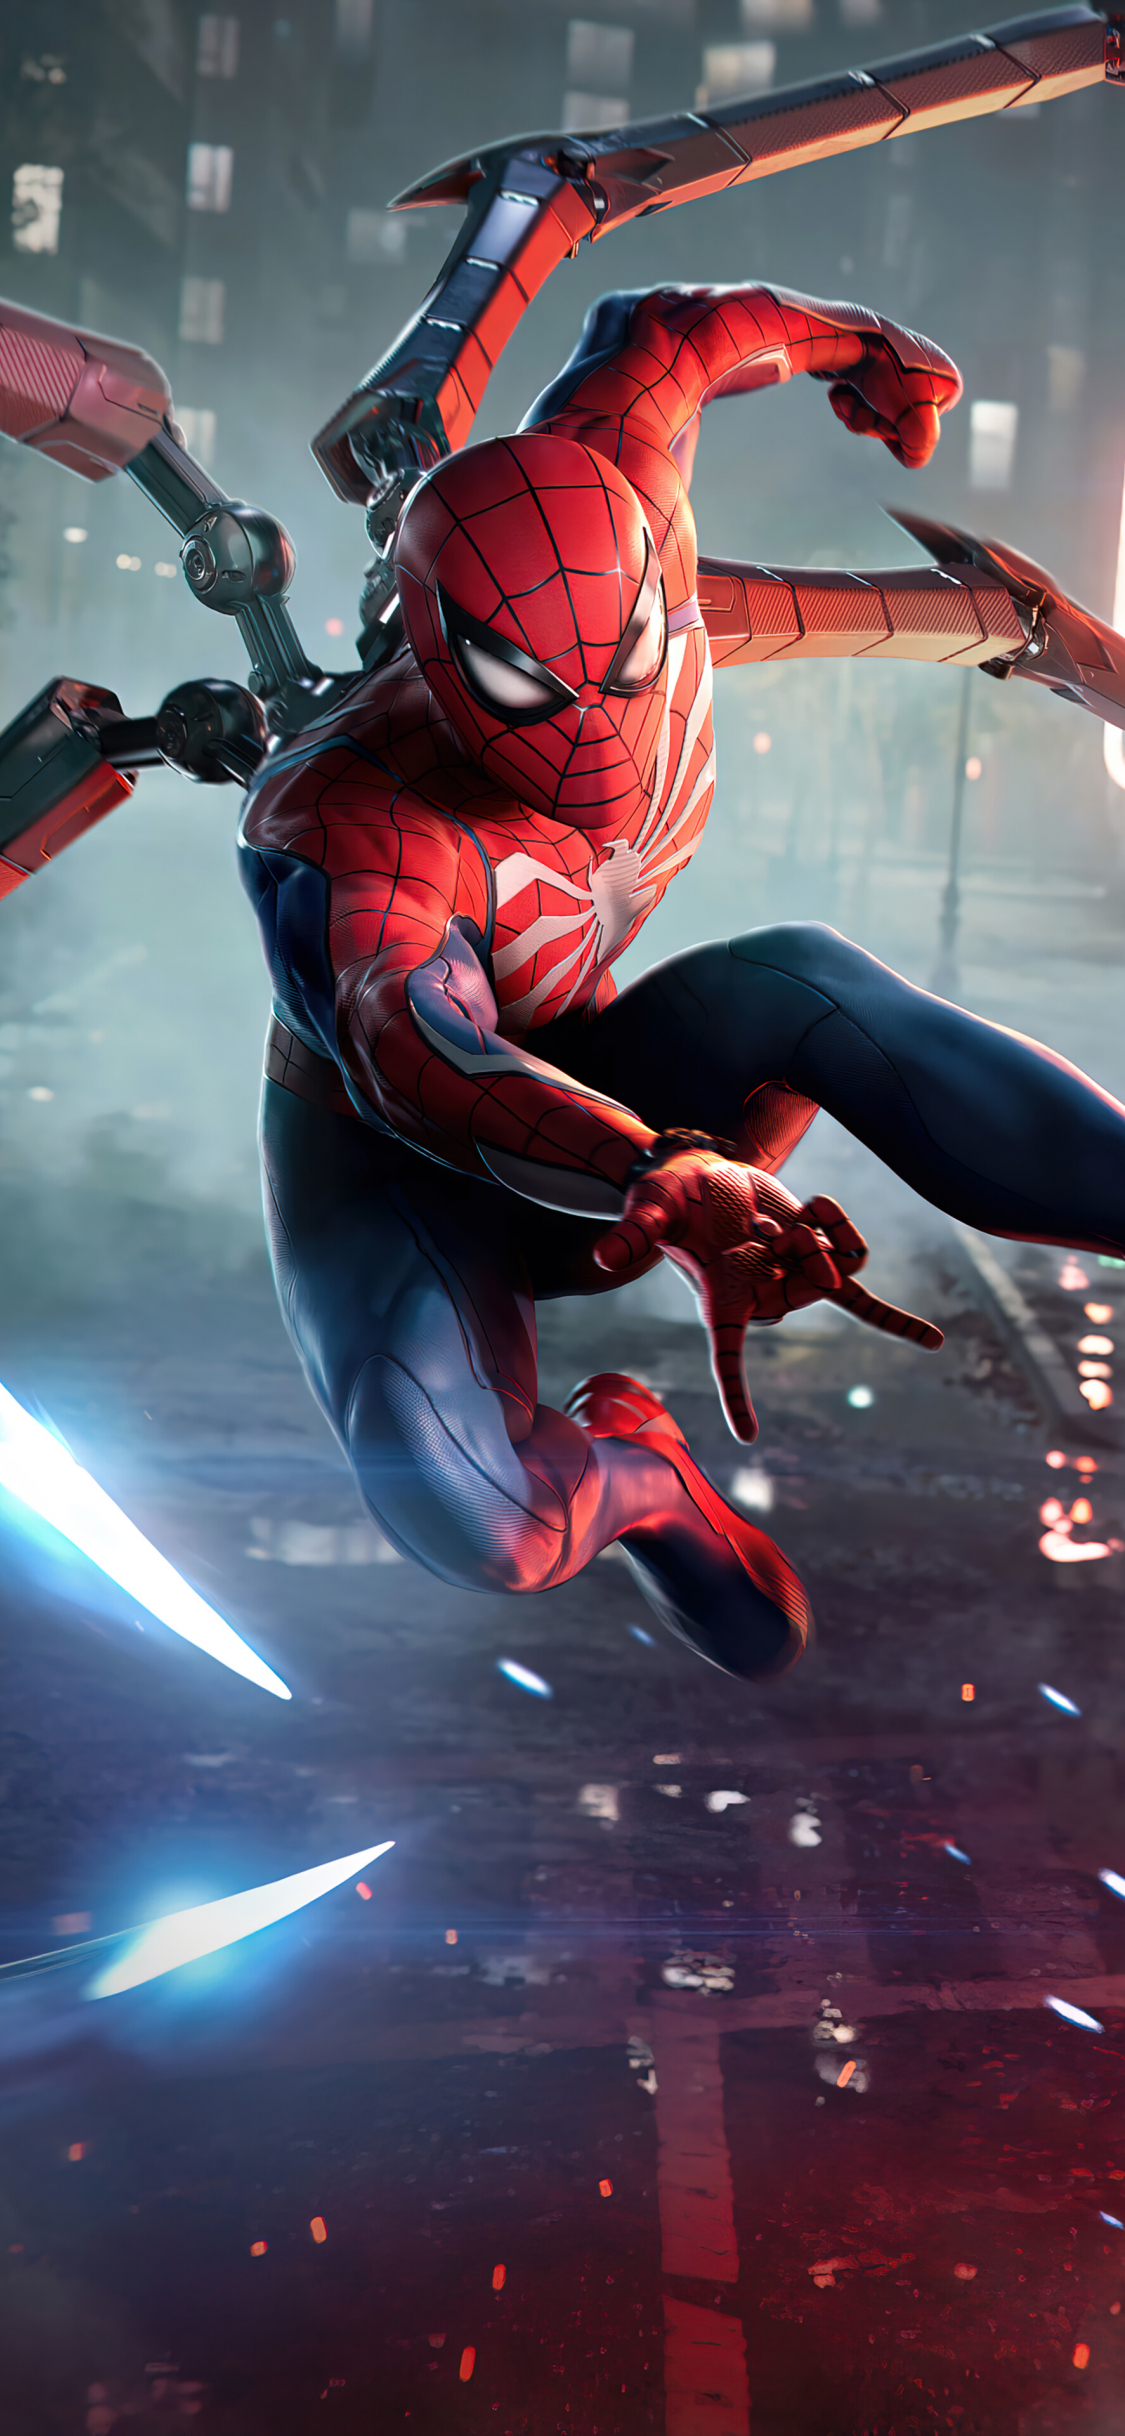 Spider-Man Miles Morales PS5 HD 4K Wallpaper #5.2855